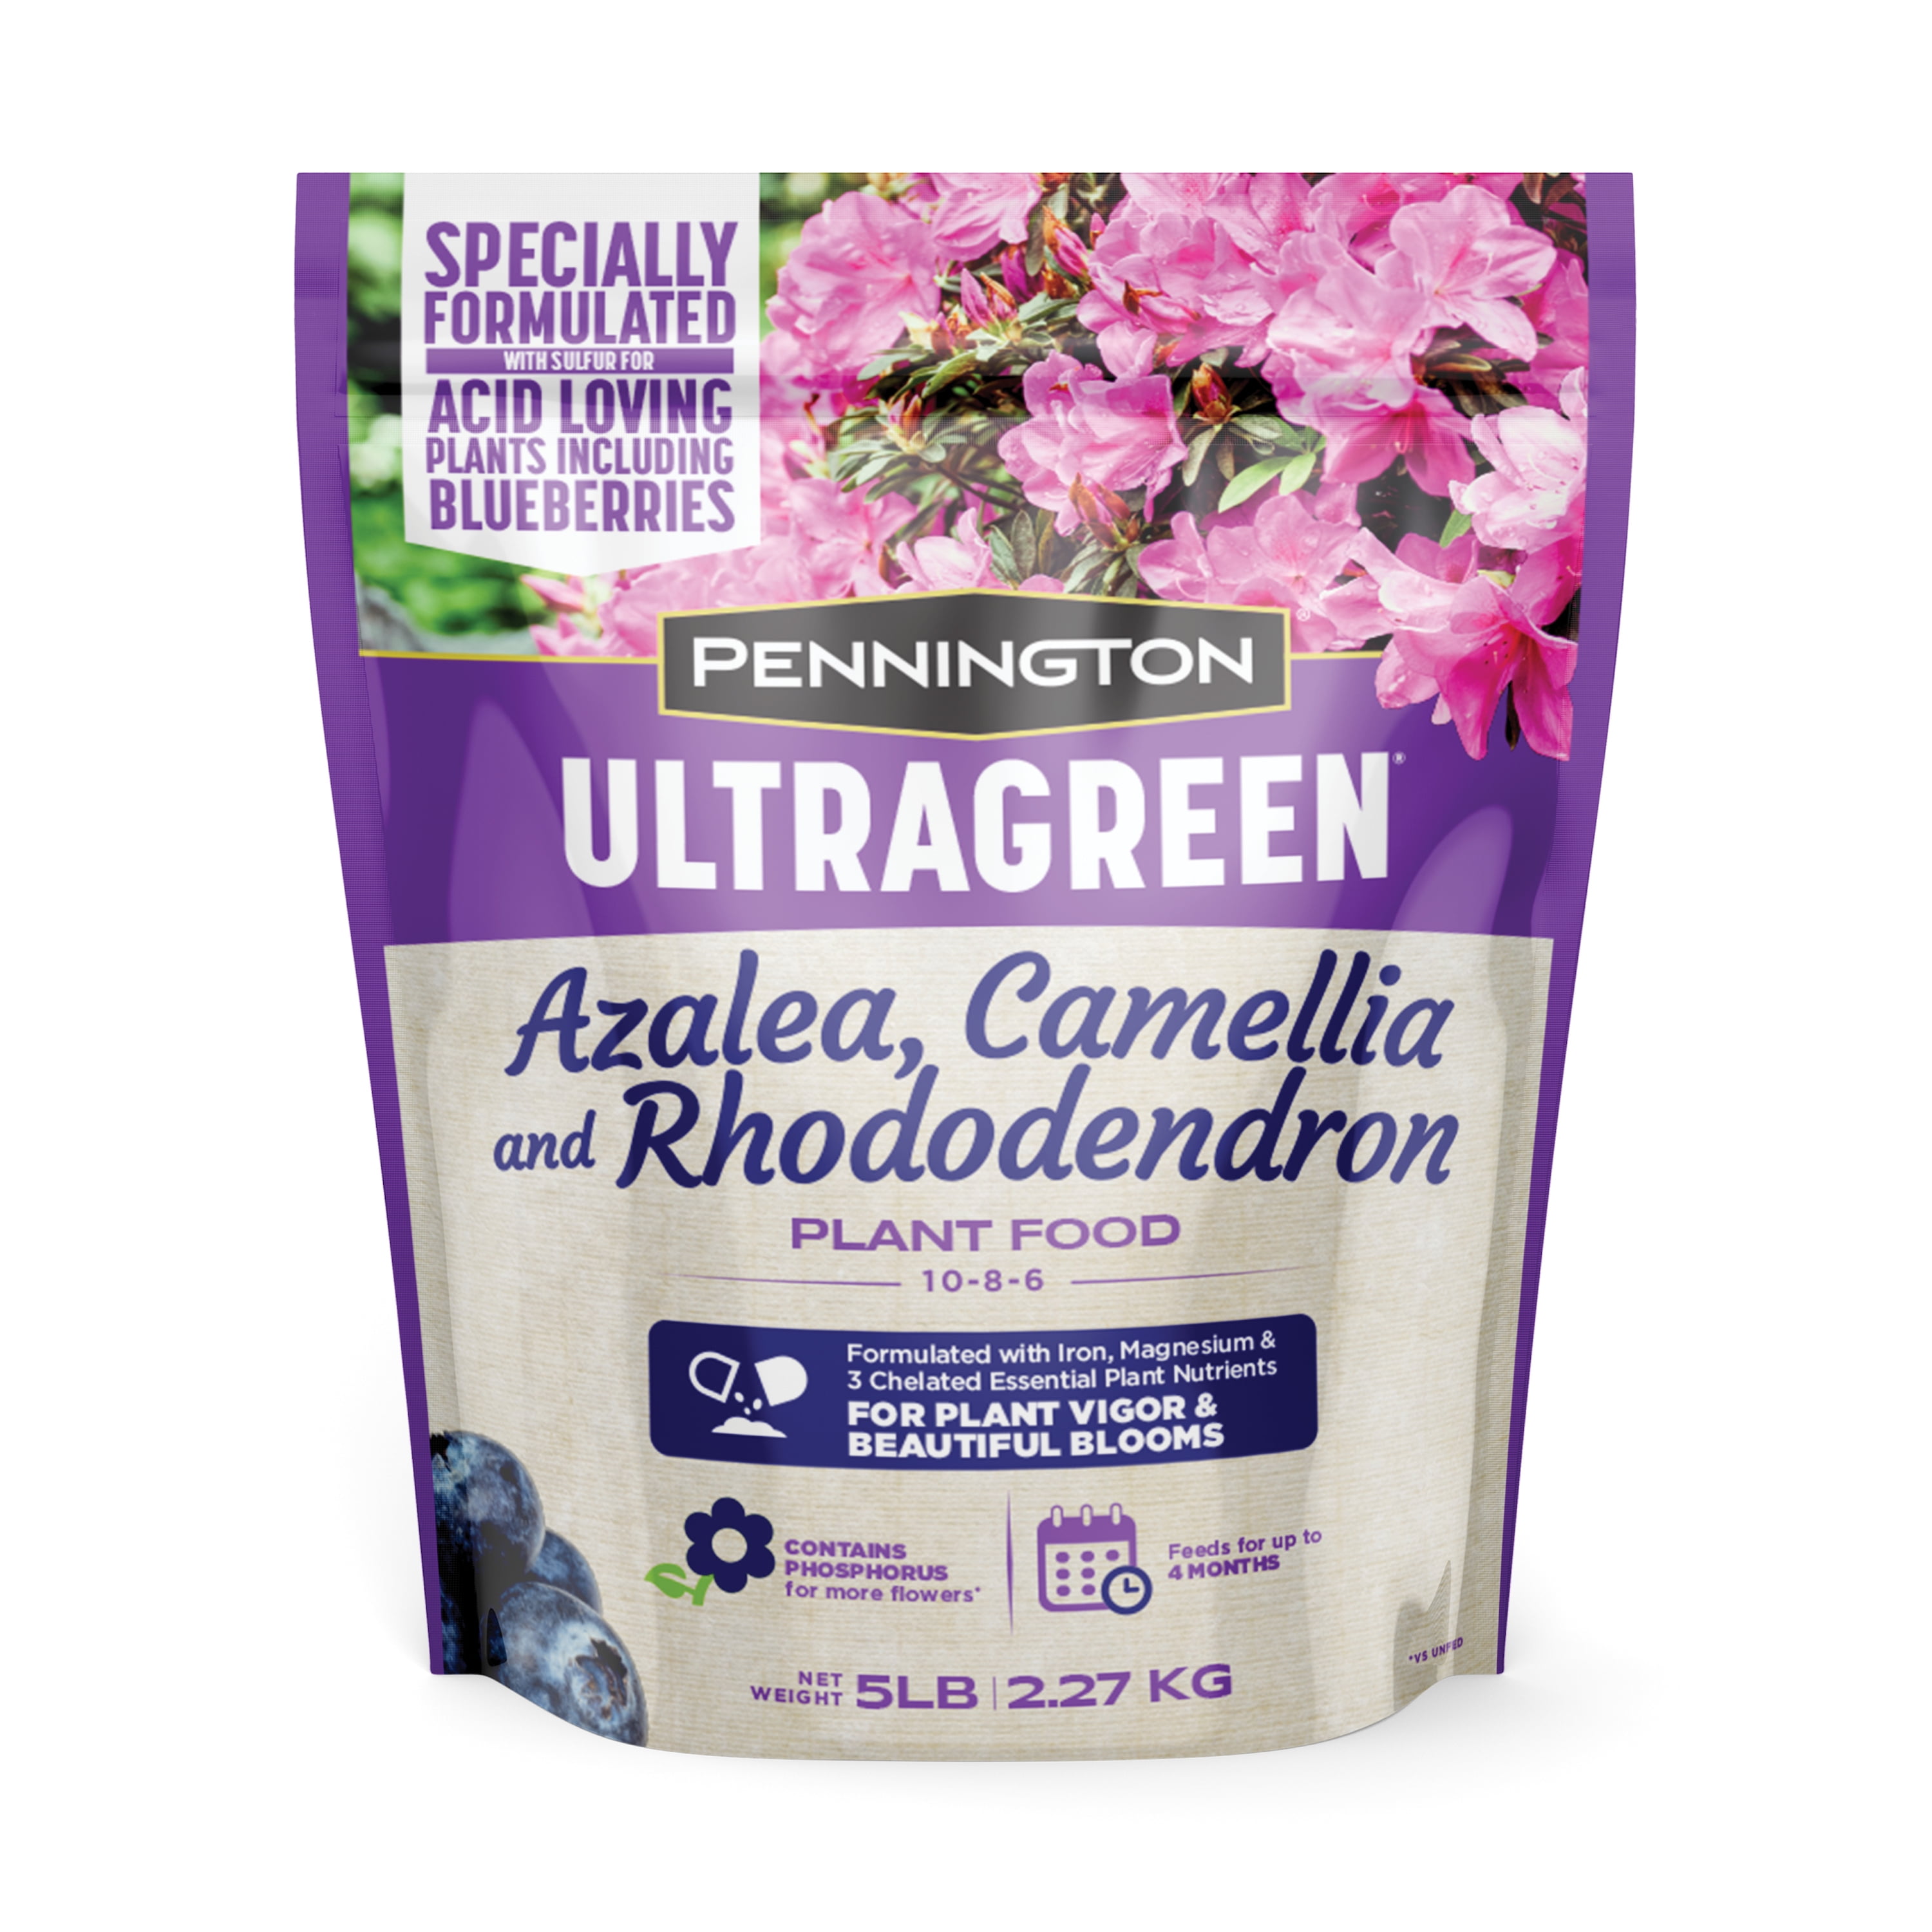 Pennington Ultra Green Azalea, Camellia & Rhododendron Shrub Food,10-8